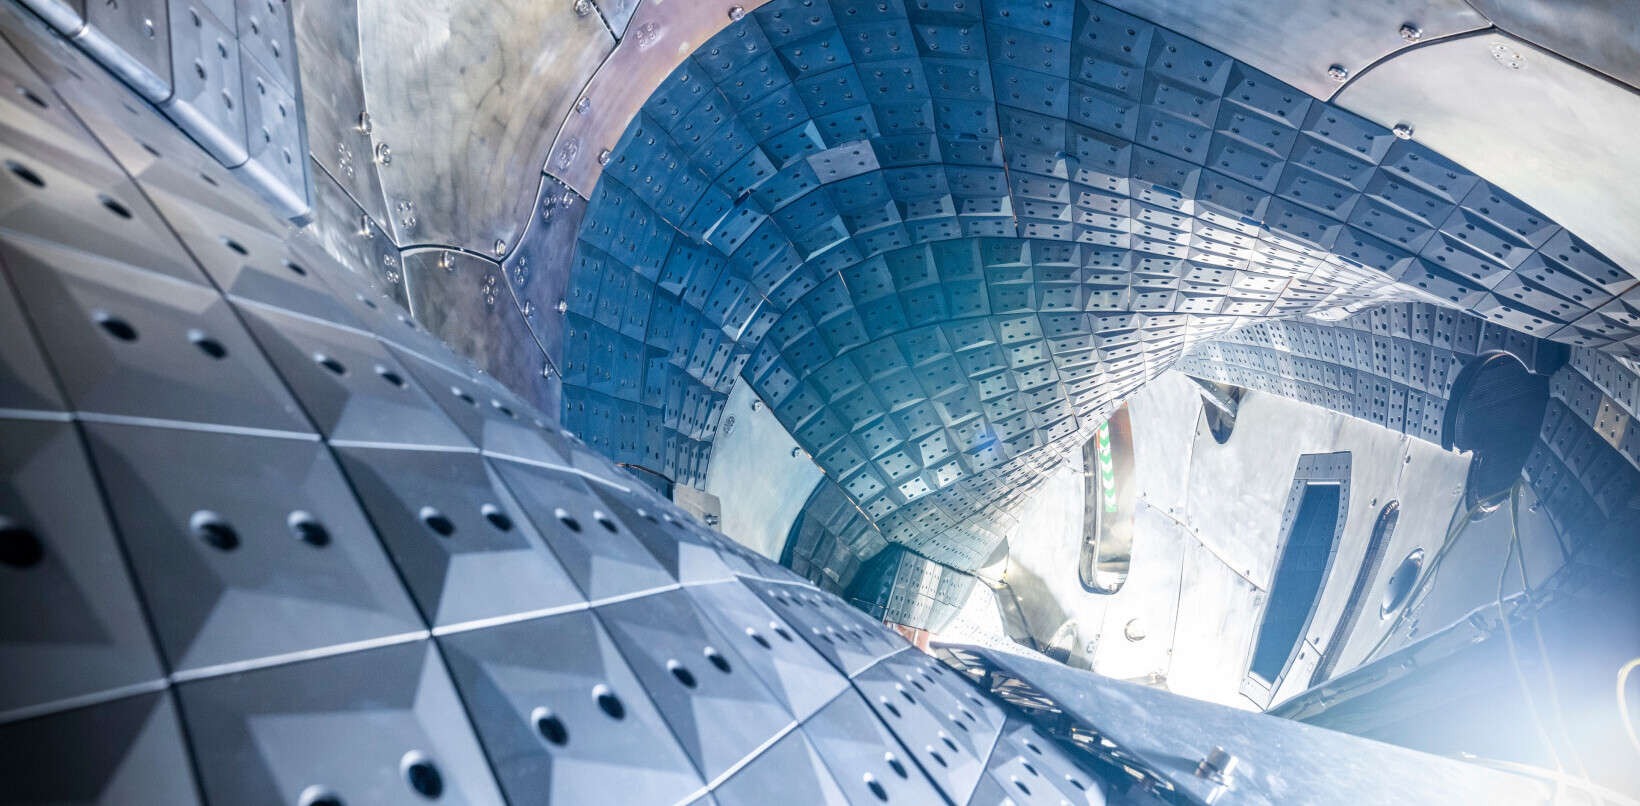 Max Planck spinout nets €20M to build ‘stellarator’ fusion machine